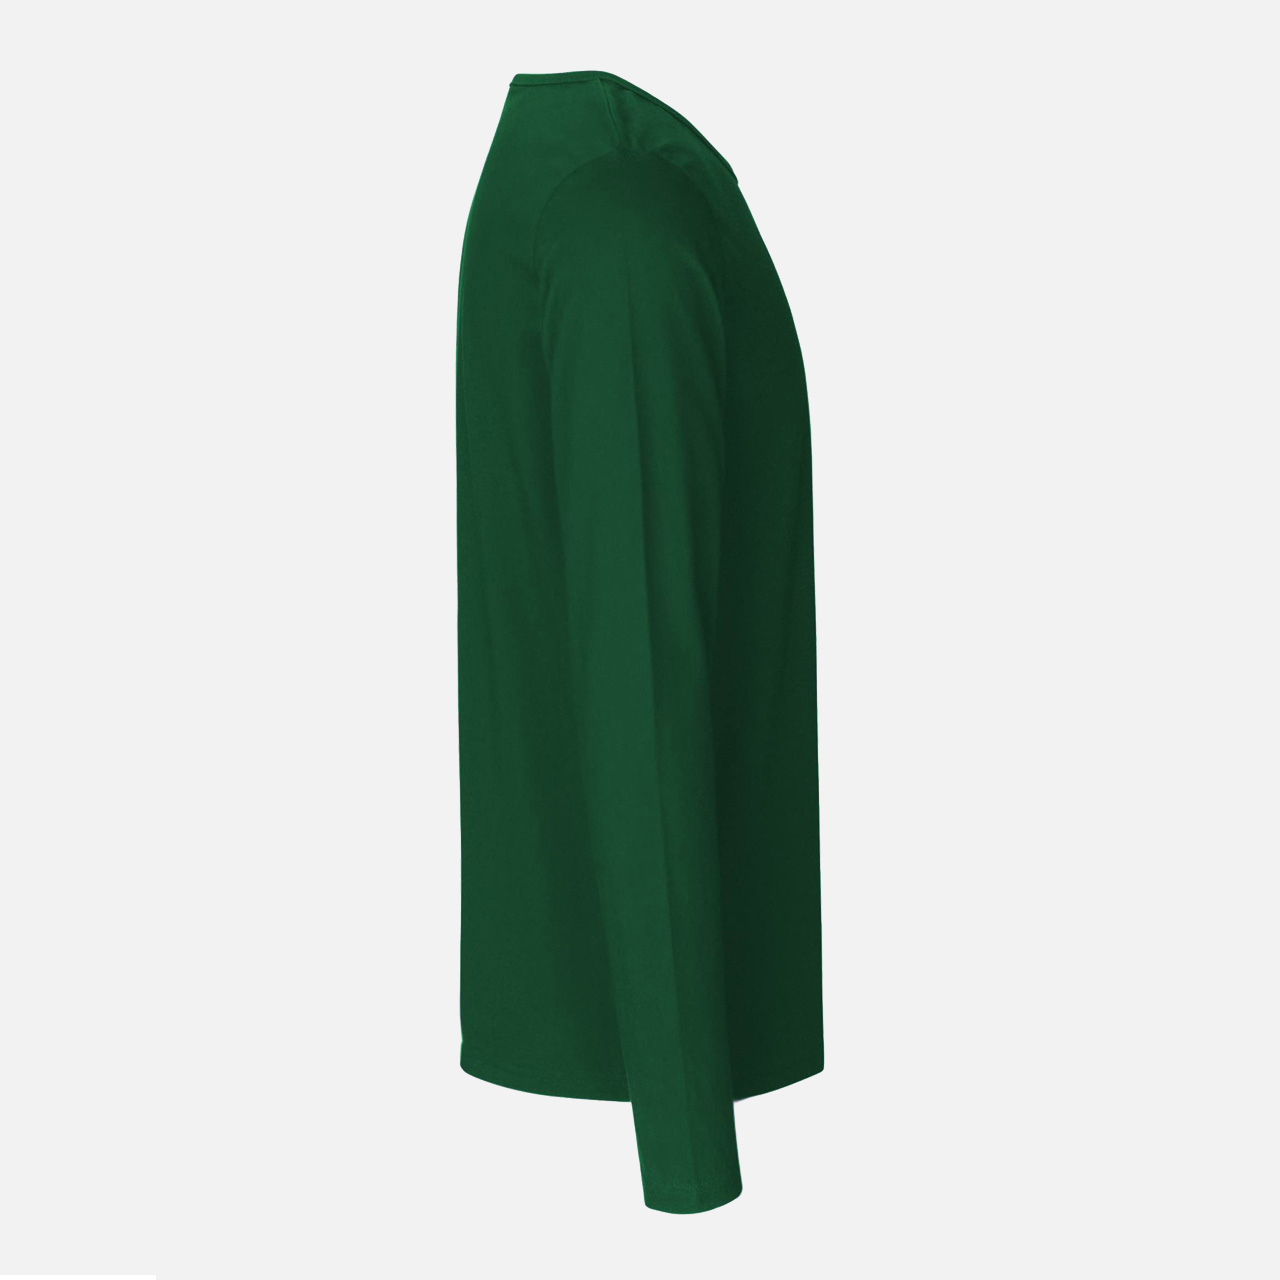 Doppelpack Mens Long Sleeve Shirt - Schwarz / Bottle Green XL Schwarz / Bottle Green